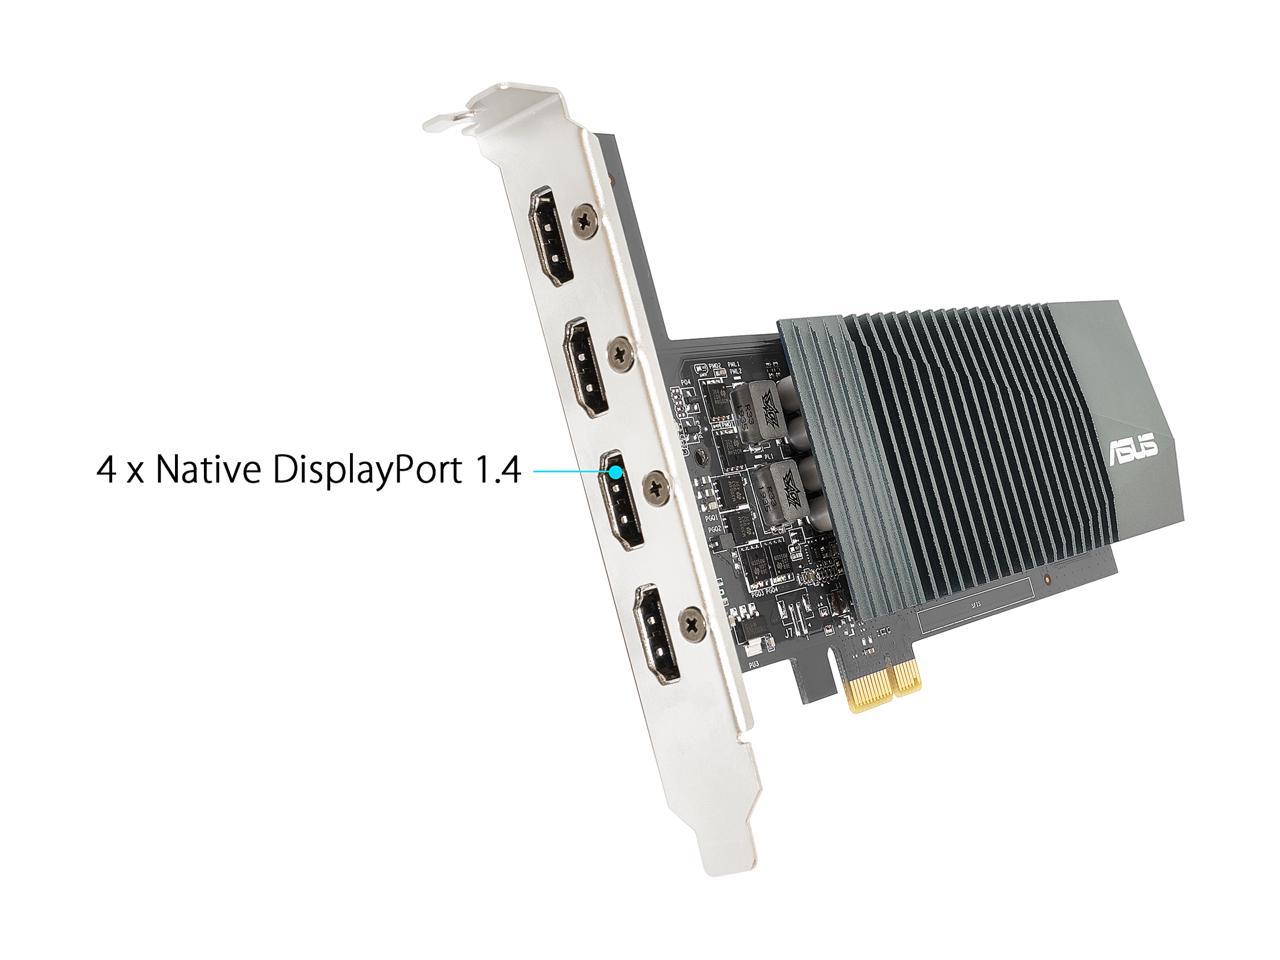 ASUS NVIDIA GeForce GT 710 Graphics Card (PCIe 2.0, 2GB GDDR5 Memory, 4 x HDMI Ports, Single-slot Design, Passive Cooling)